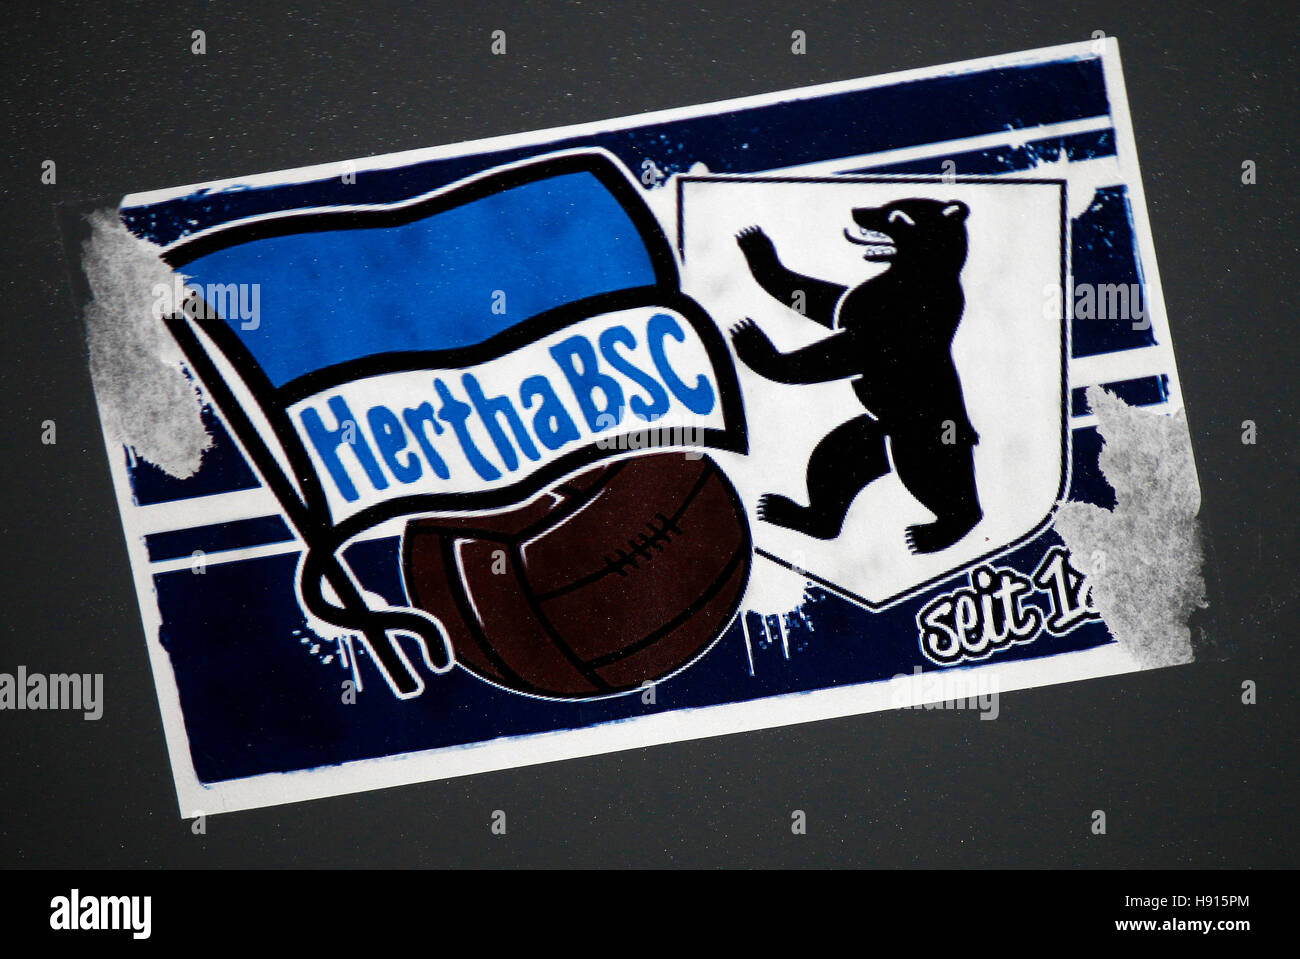 Das Logo der Marke "Hertha BSC Berlin Berlino. Foto Stock